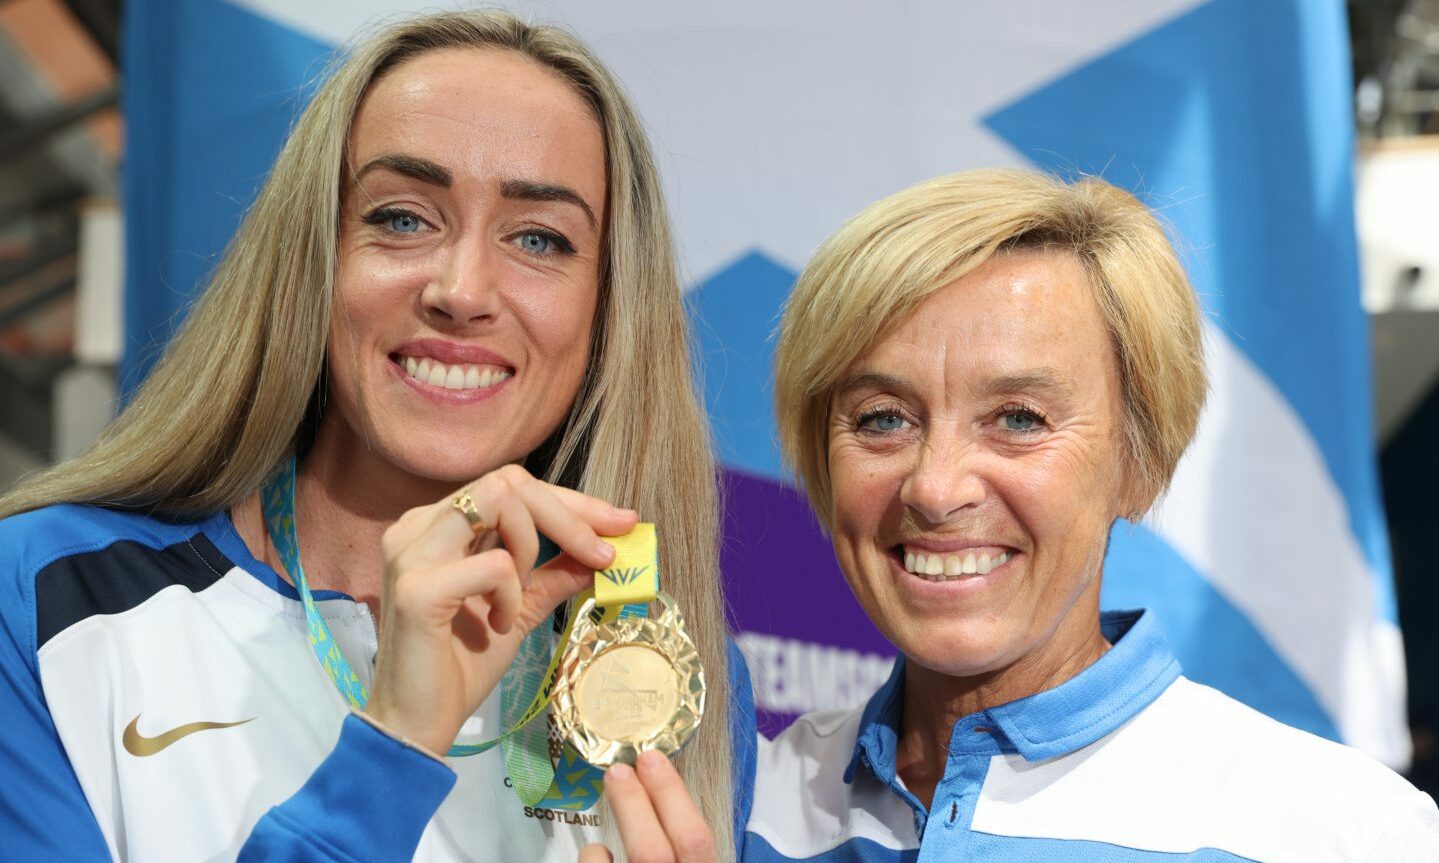 Eilish McColgan with her gold medal alongside her mother, Liz